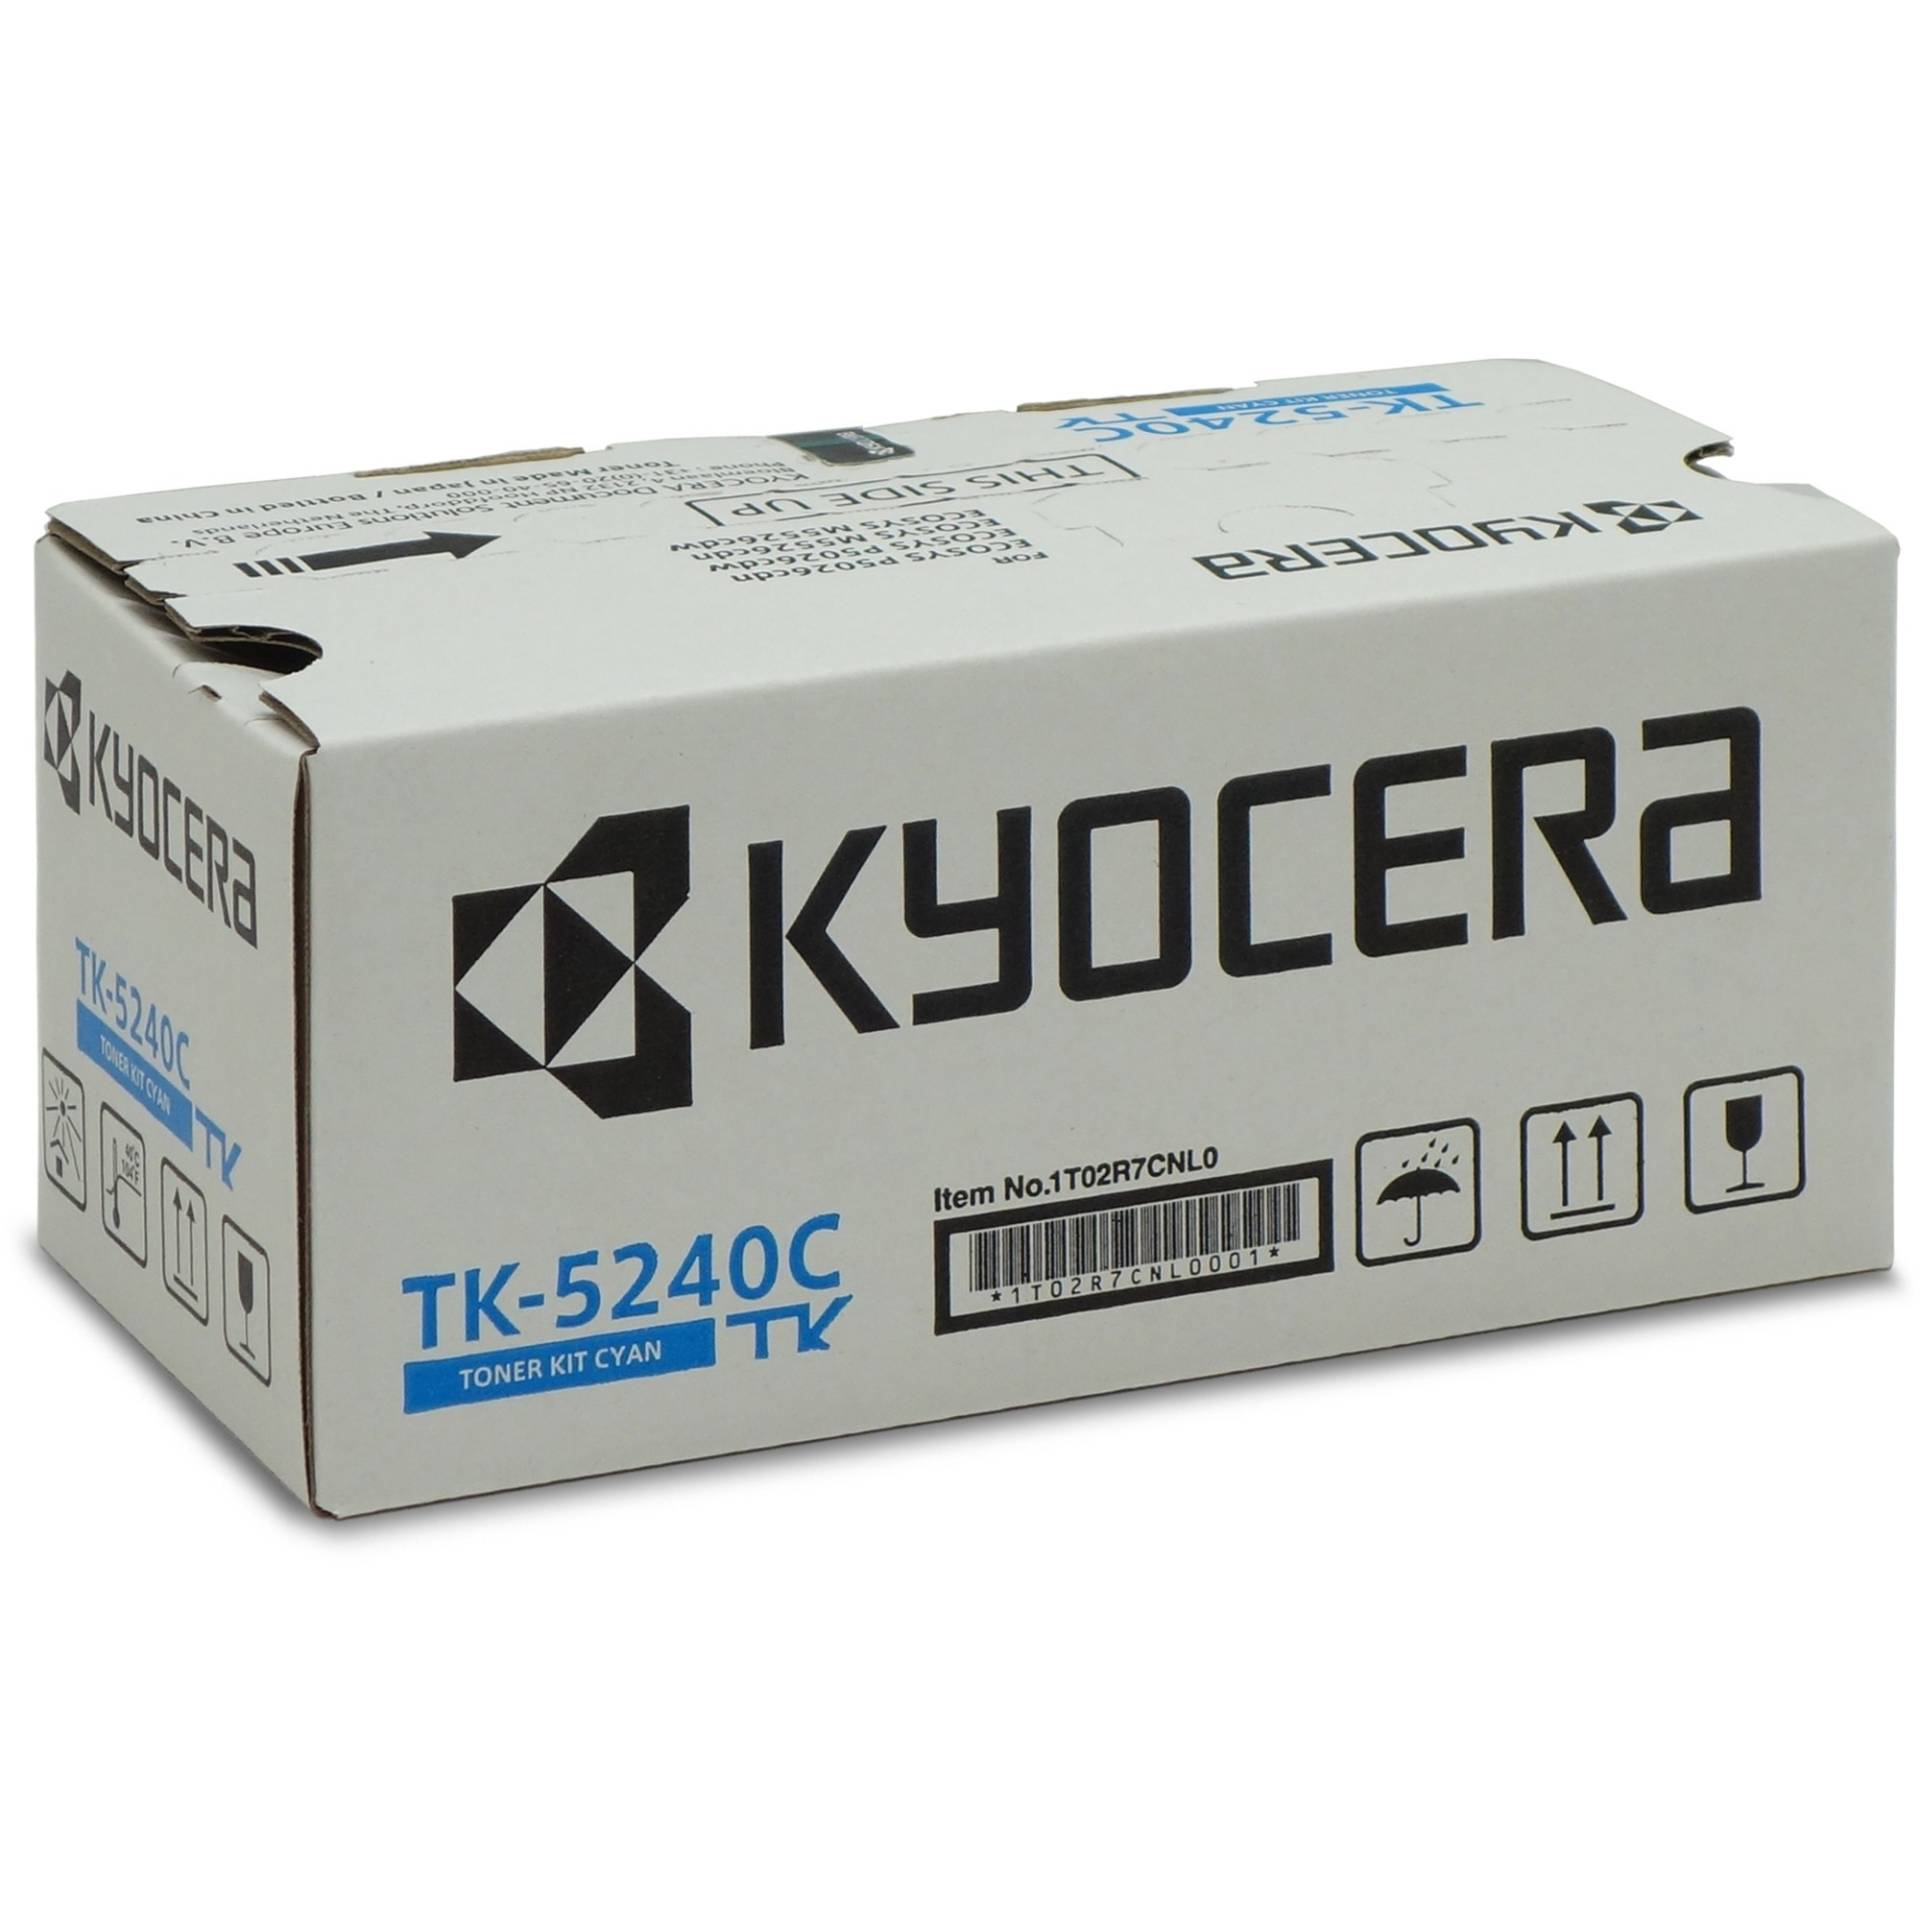 Toner cyan TK-5240C von Kyocera